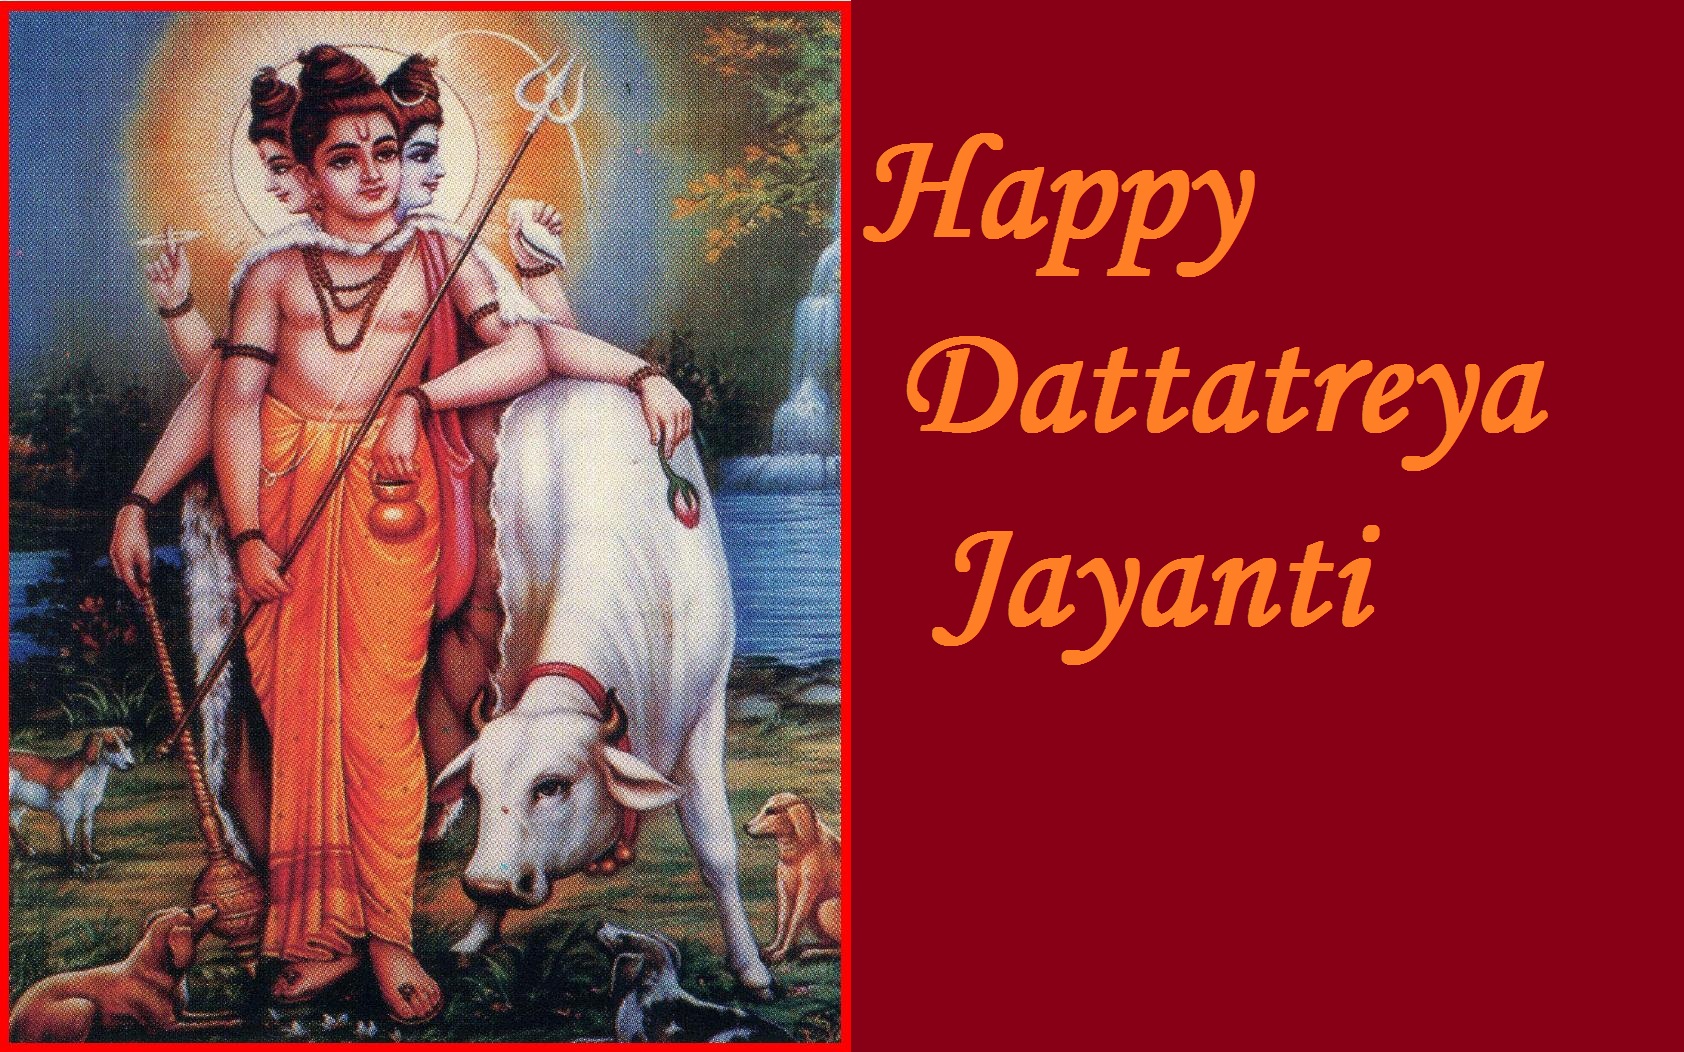 Dattatreya Jayanti images